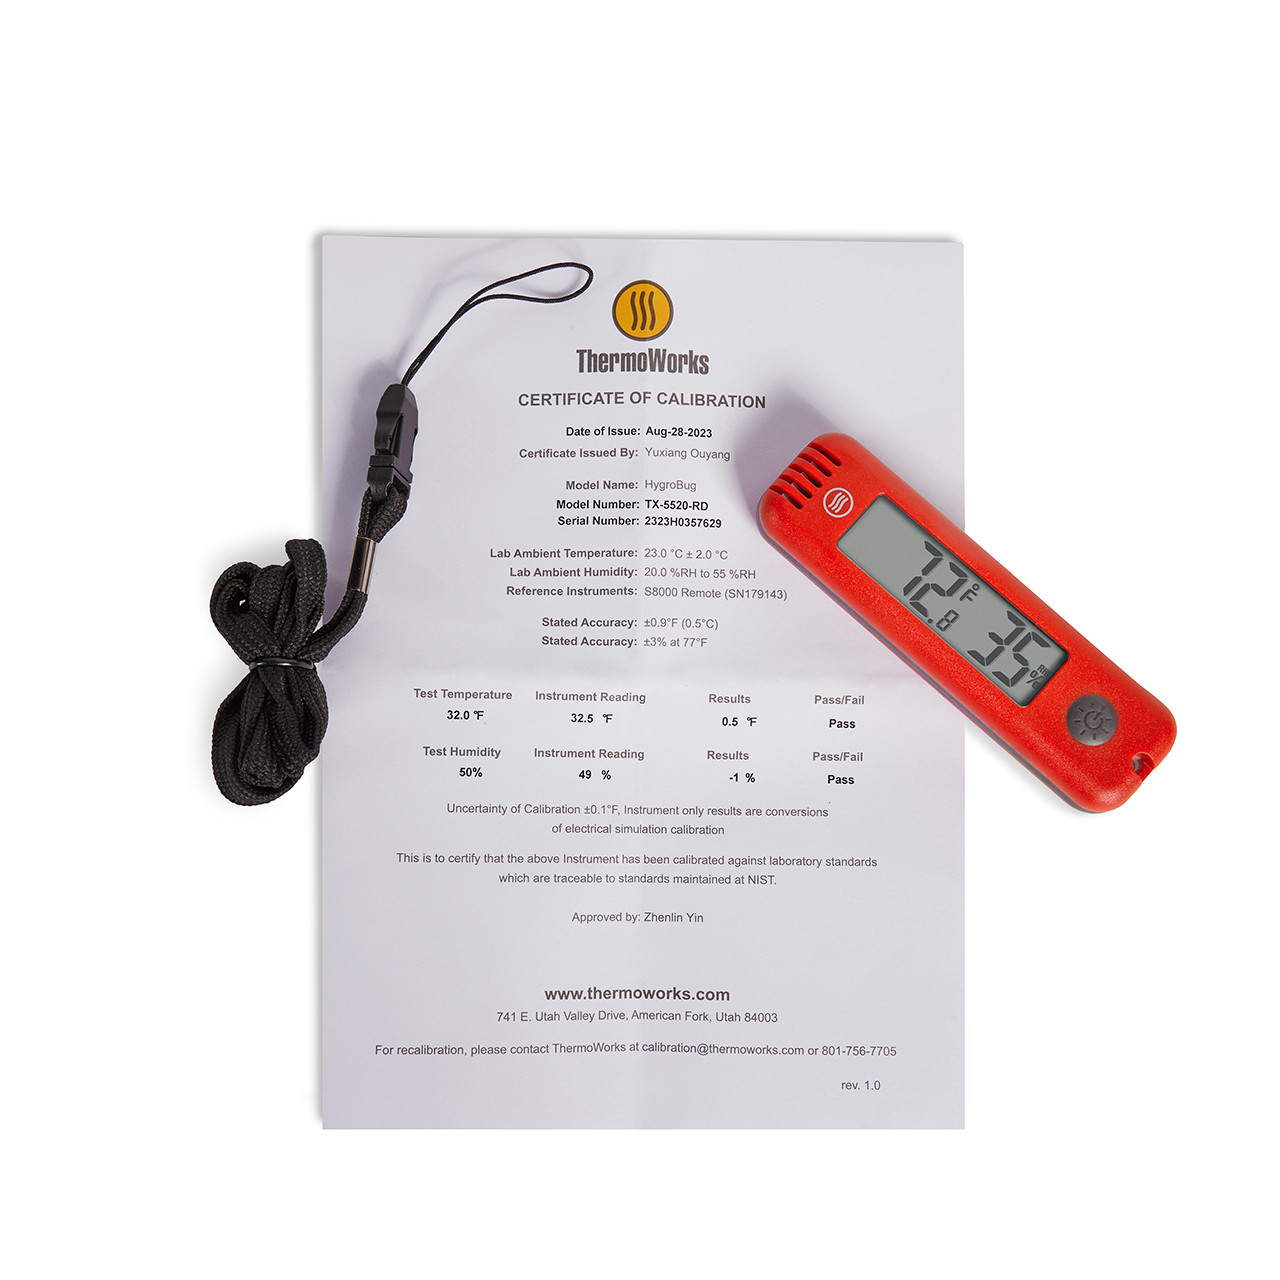 Humidity Meters  Temperature Humidity Indicator — Triplett Test Equipment  & Tools